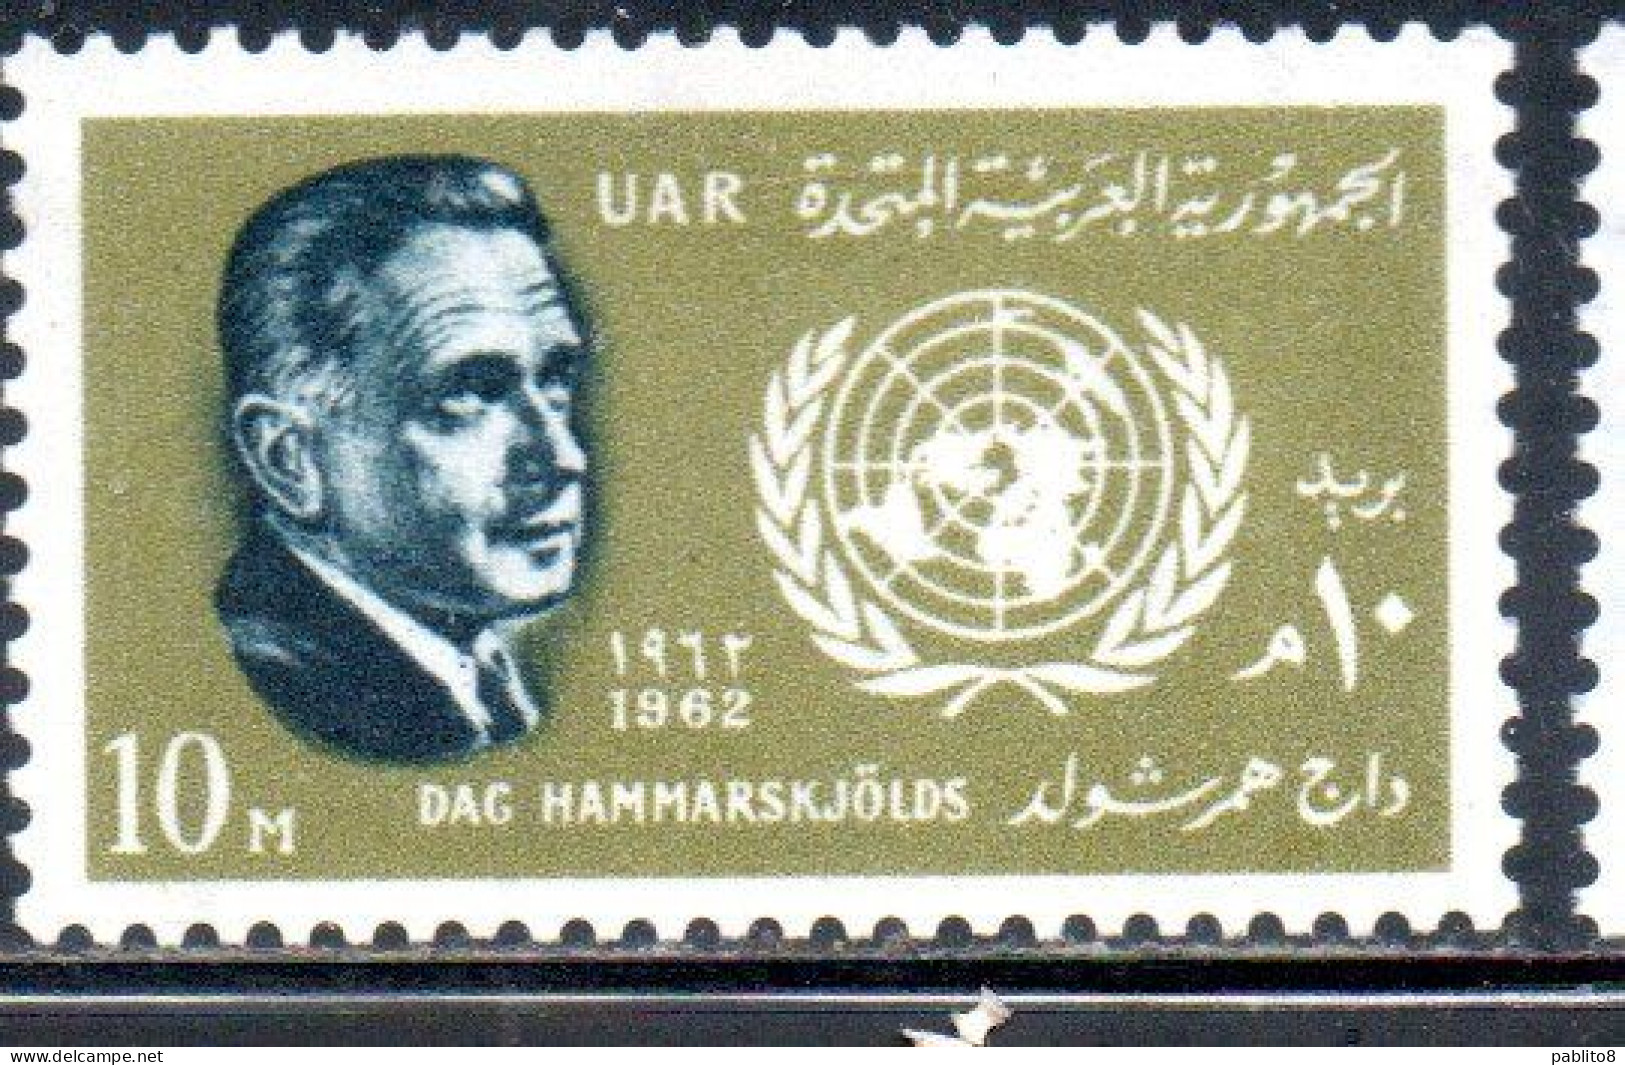 UAR EGYPT EGITTO 1962 DAG HAMMARSKJOLD SECRETARY GENERAL OF THE UN ONU 10m MH - Ungebraucht